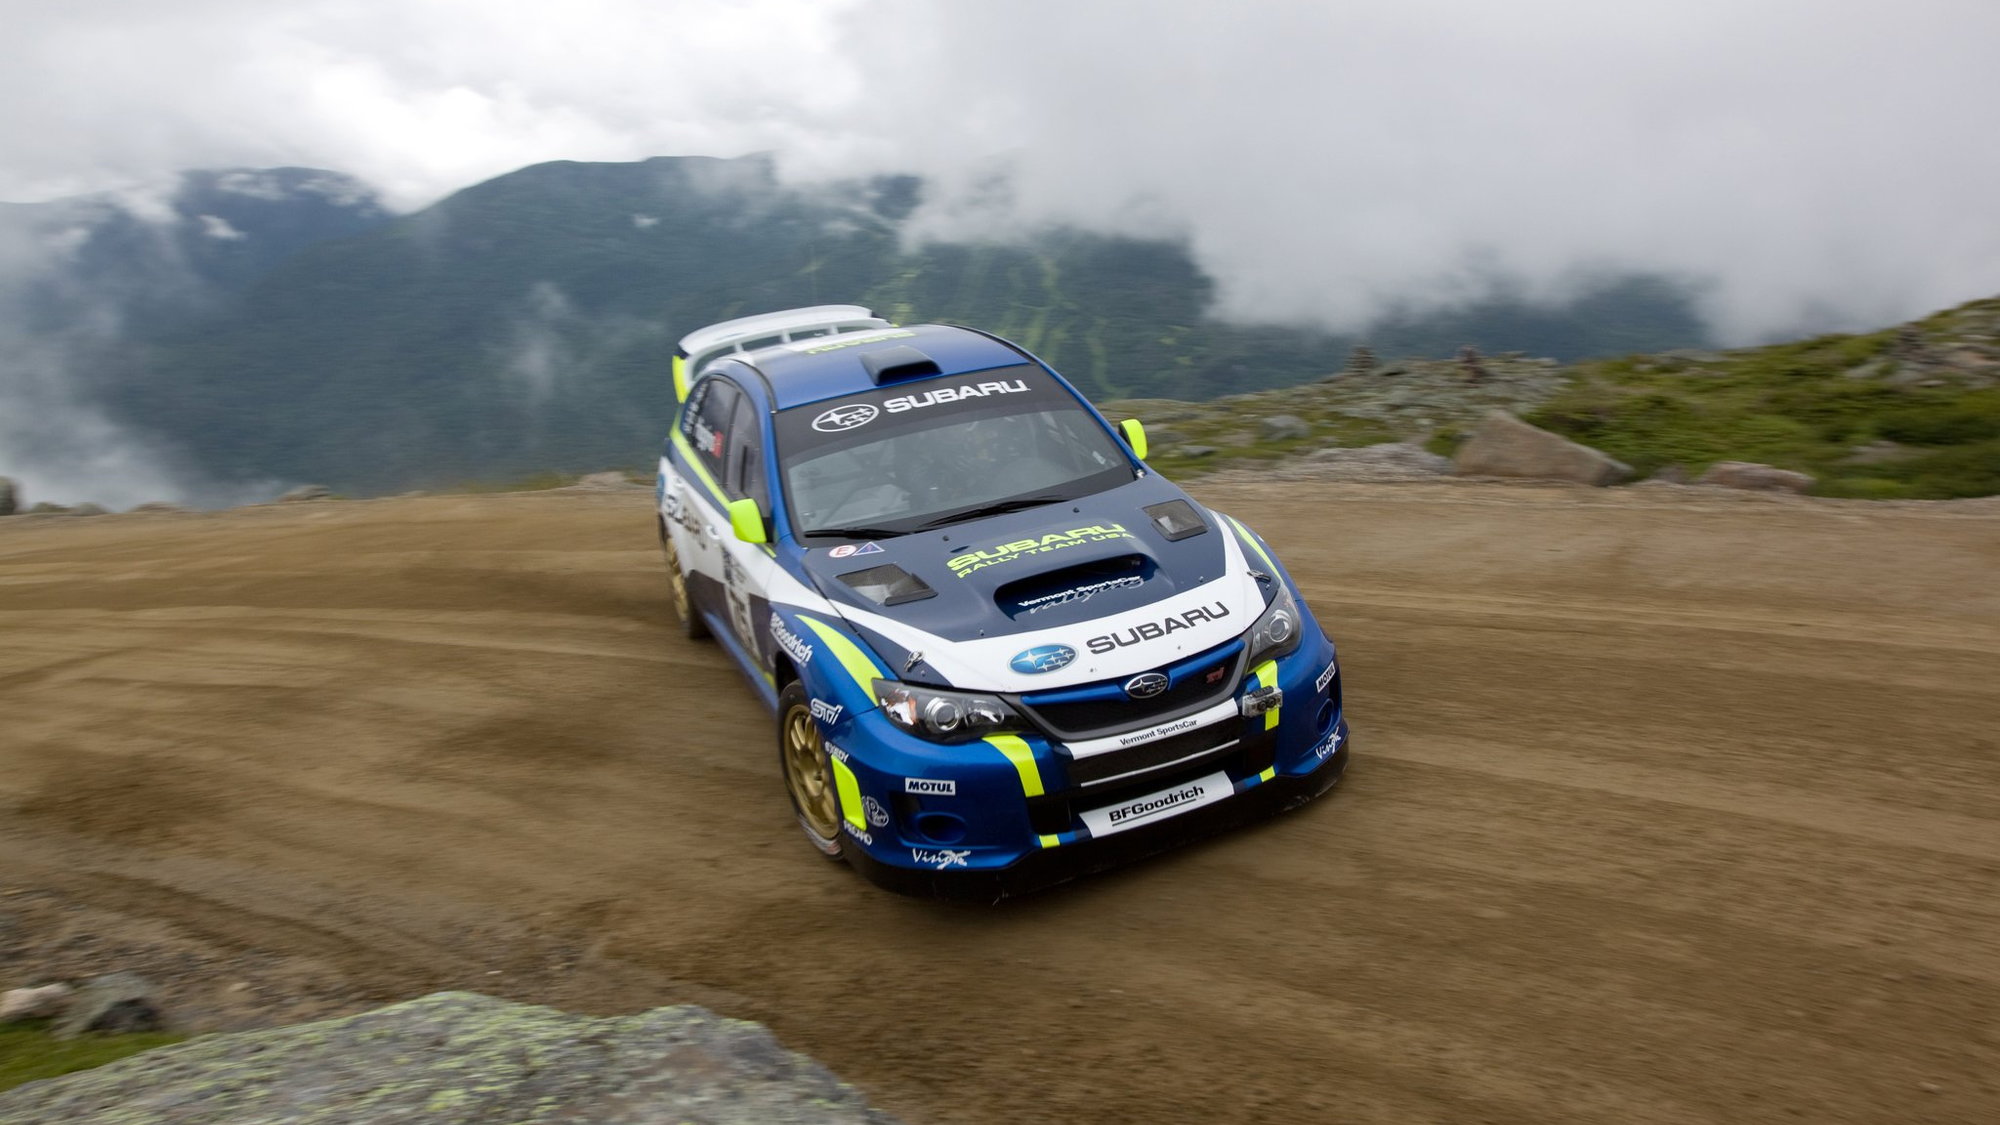 David Higgins drives a Subaru WRX to new Mt. Washington record